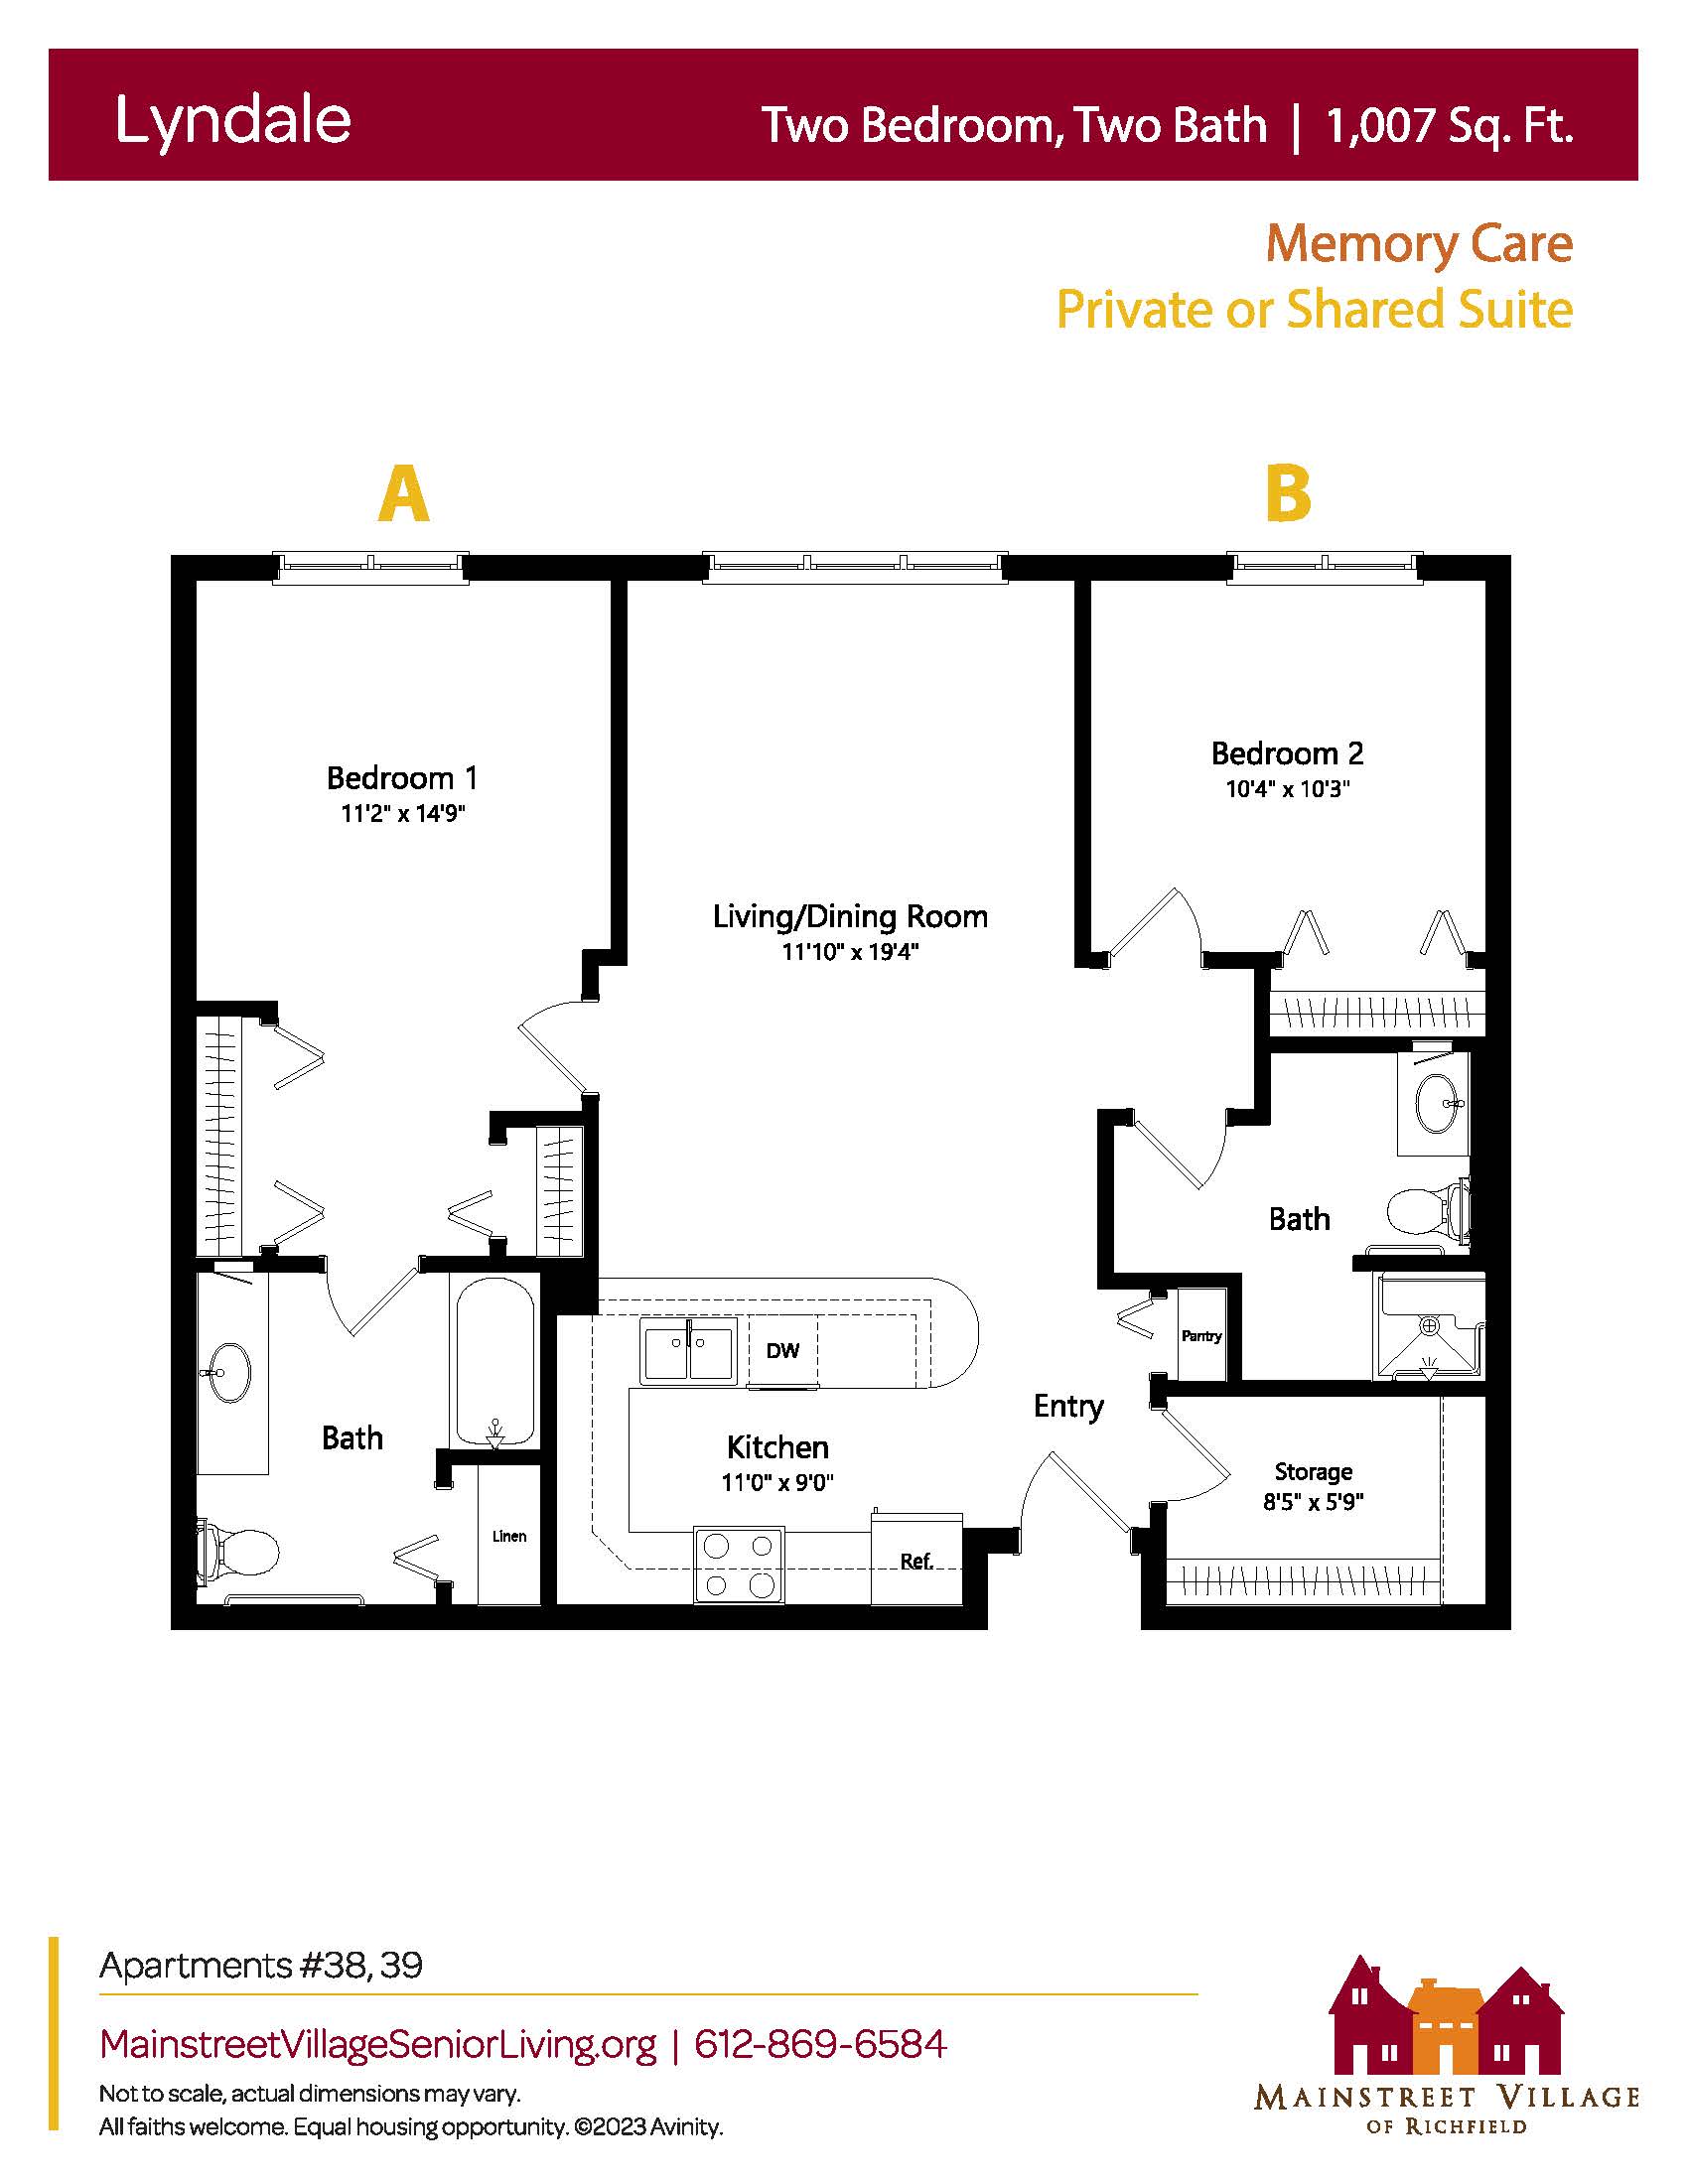 Floor plan for Lyndale (shared unit)